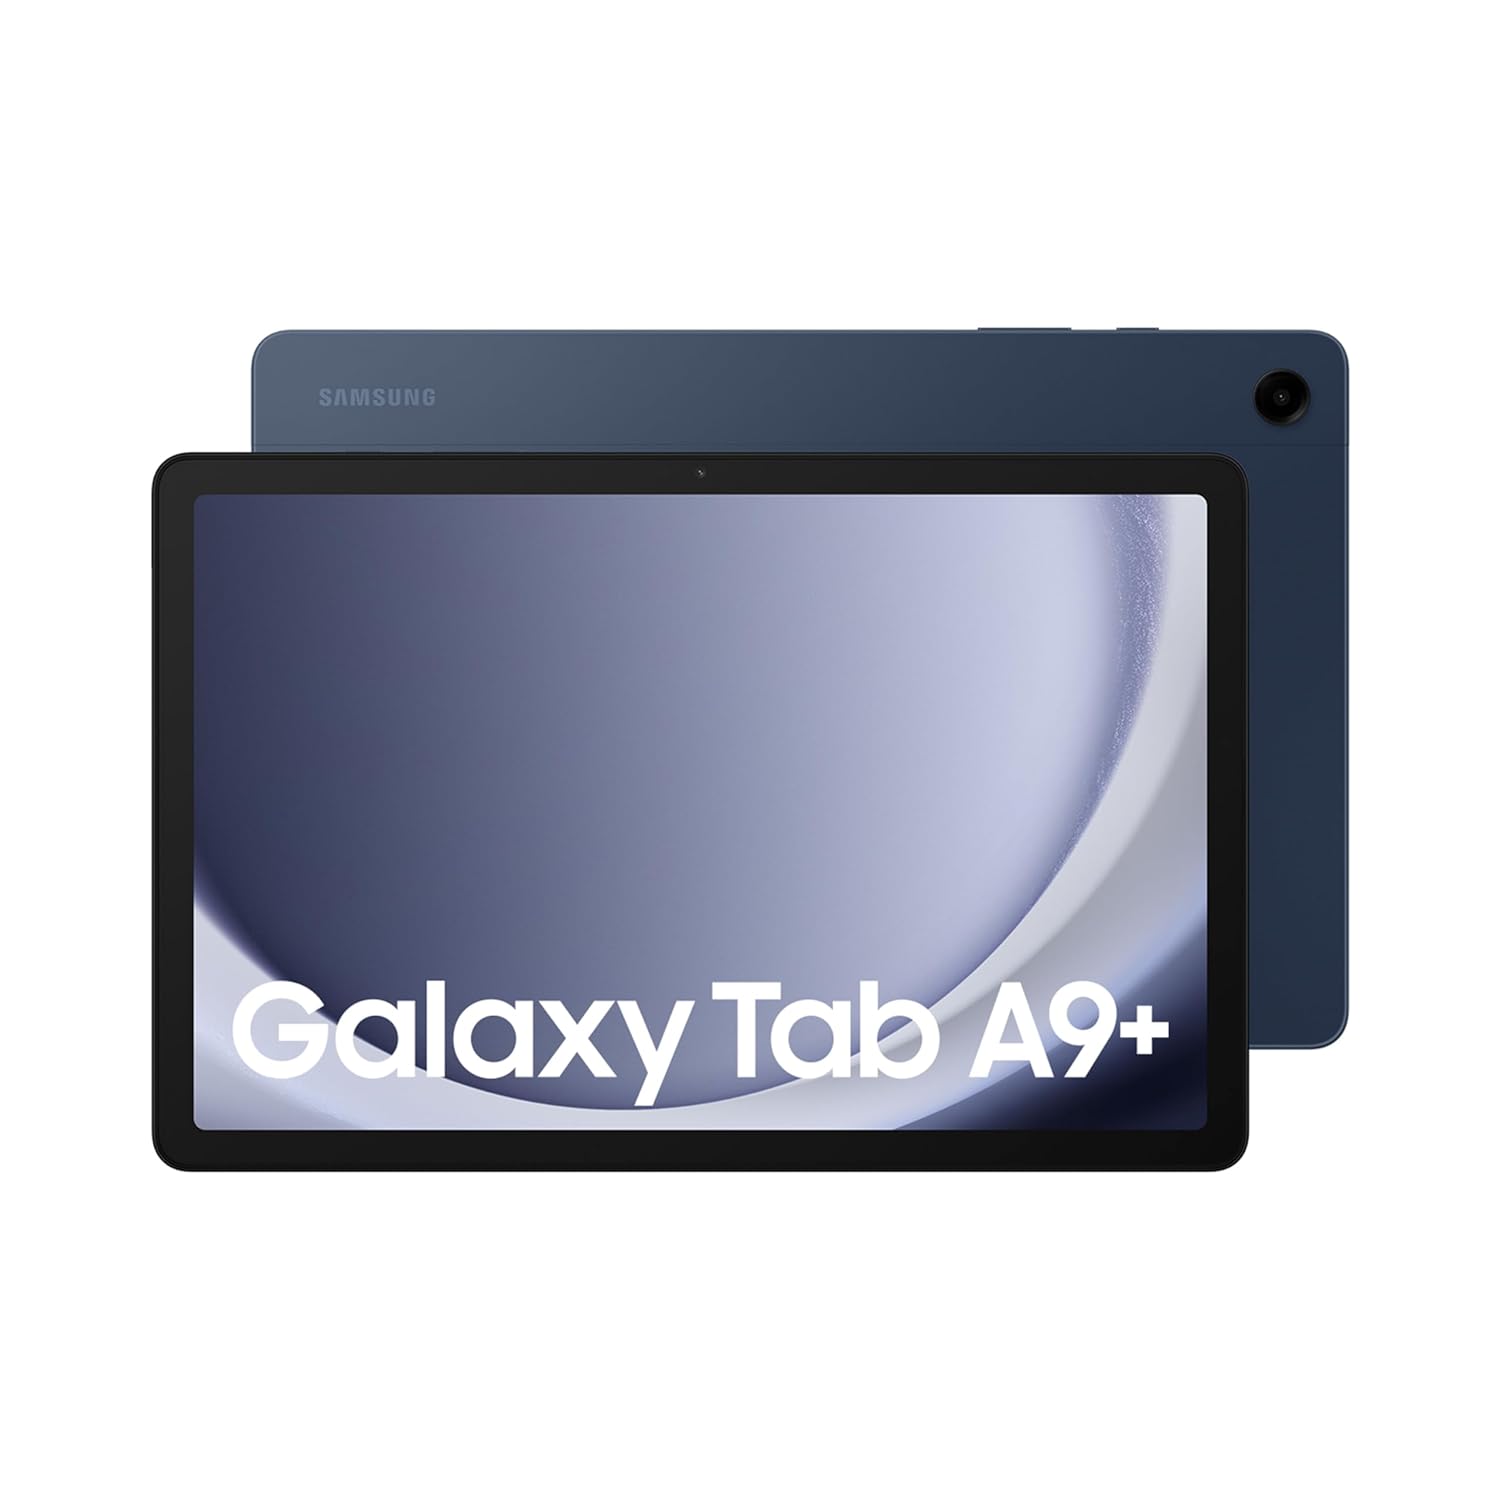 Samsung Galaxy Tab A9+ 27.94 (11.0 inch) Display, RAM 4 GB, ROM 64 GB Expandable, Wi-Fi+5G Tablet, Navy - Mahajan Electronics Online